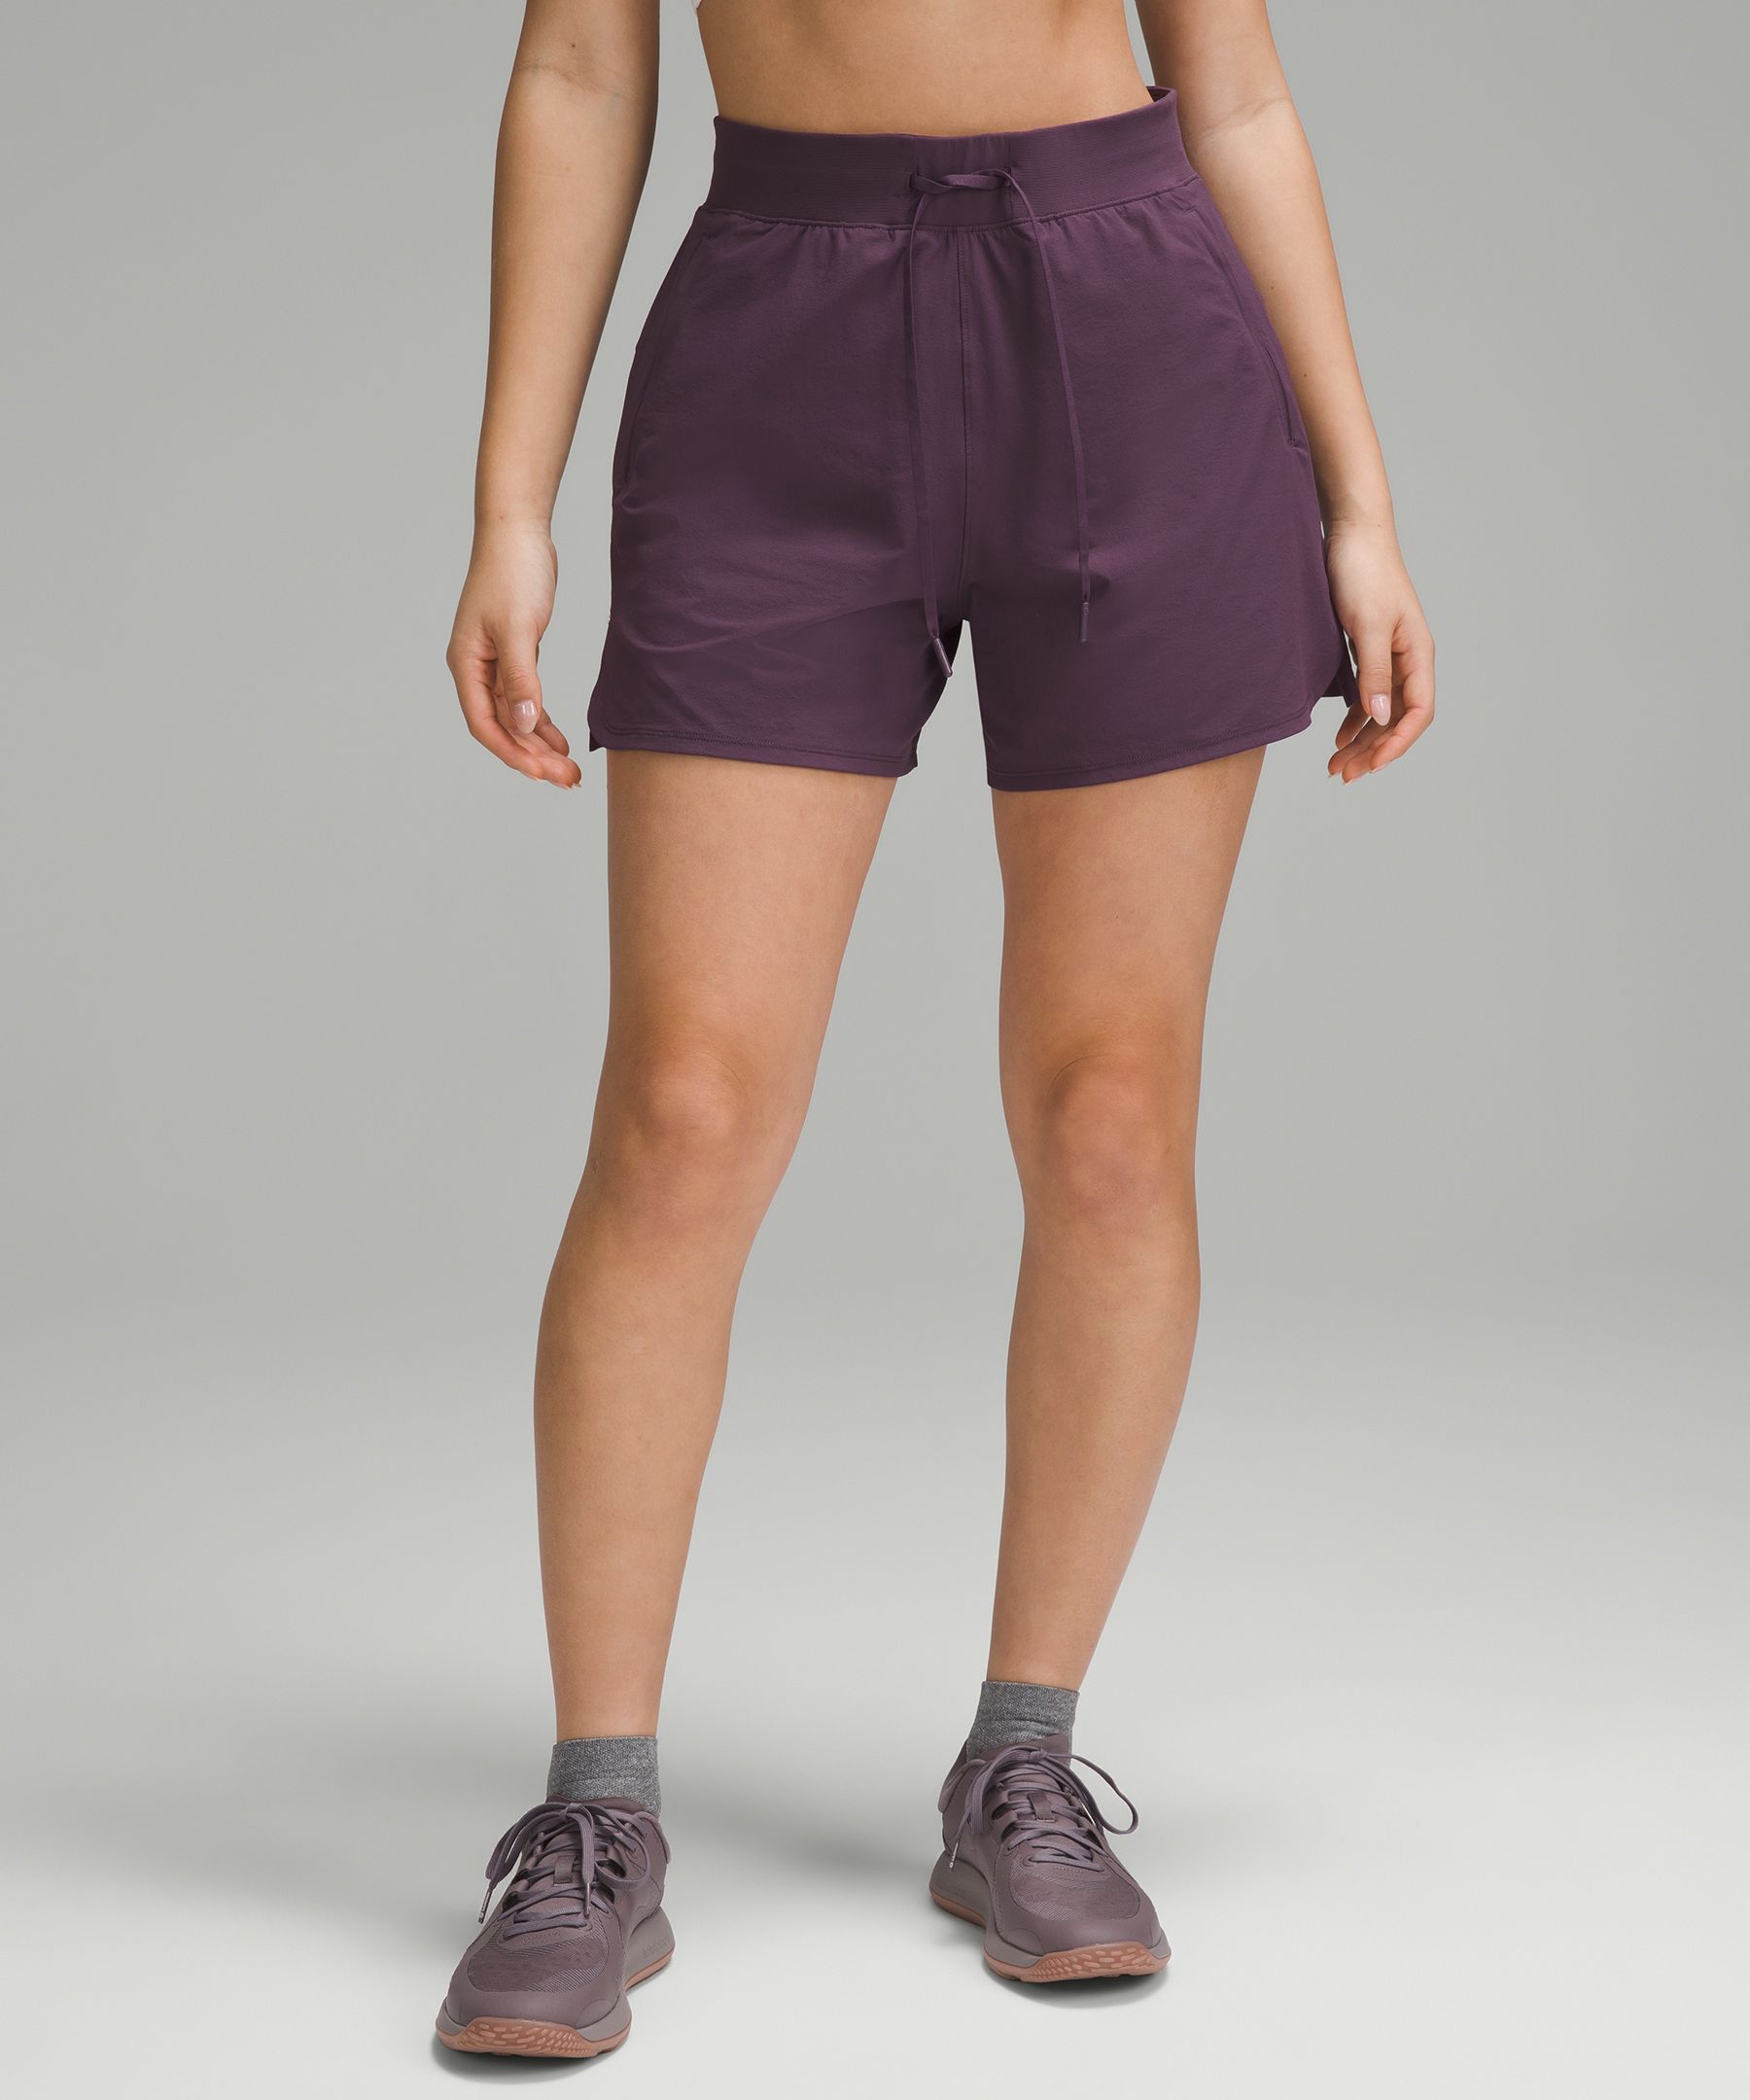 Purple Lululemon speed up shorts 4” inseam great - Depop